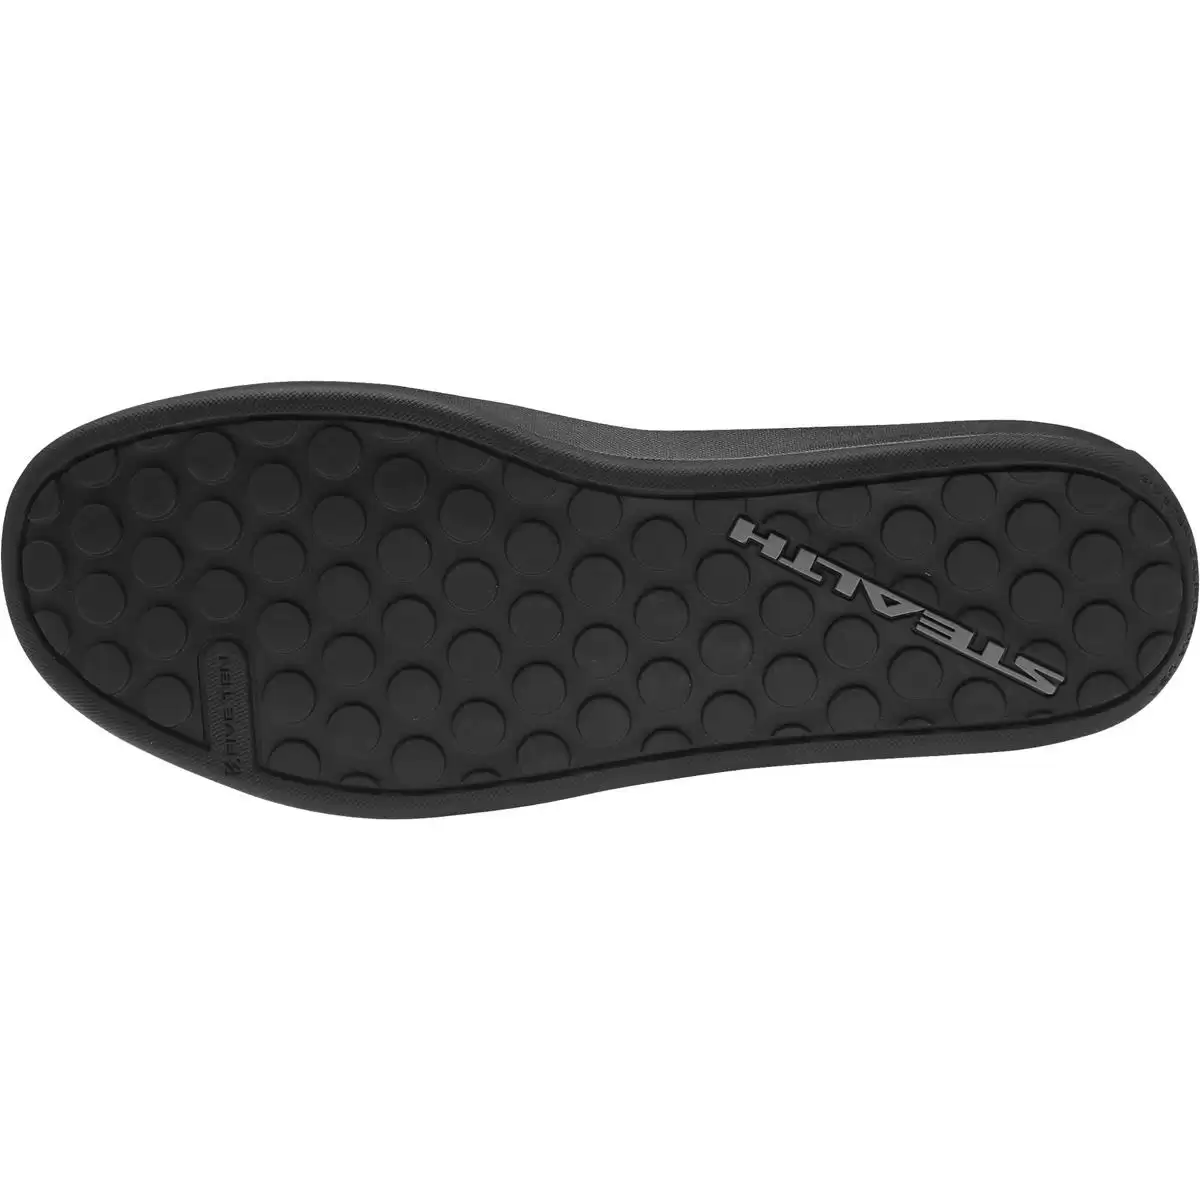 MTB Flat Shoes Freerider Pro Primeblue Black/Yellow Size 47 #4